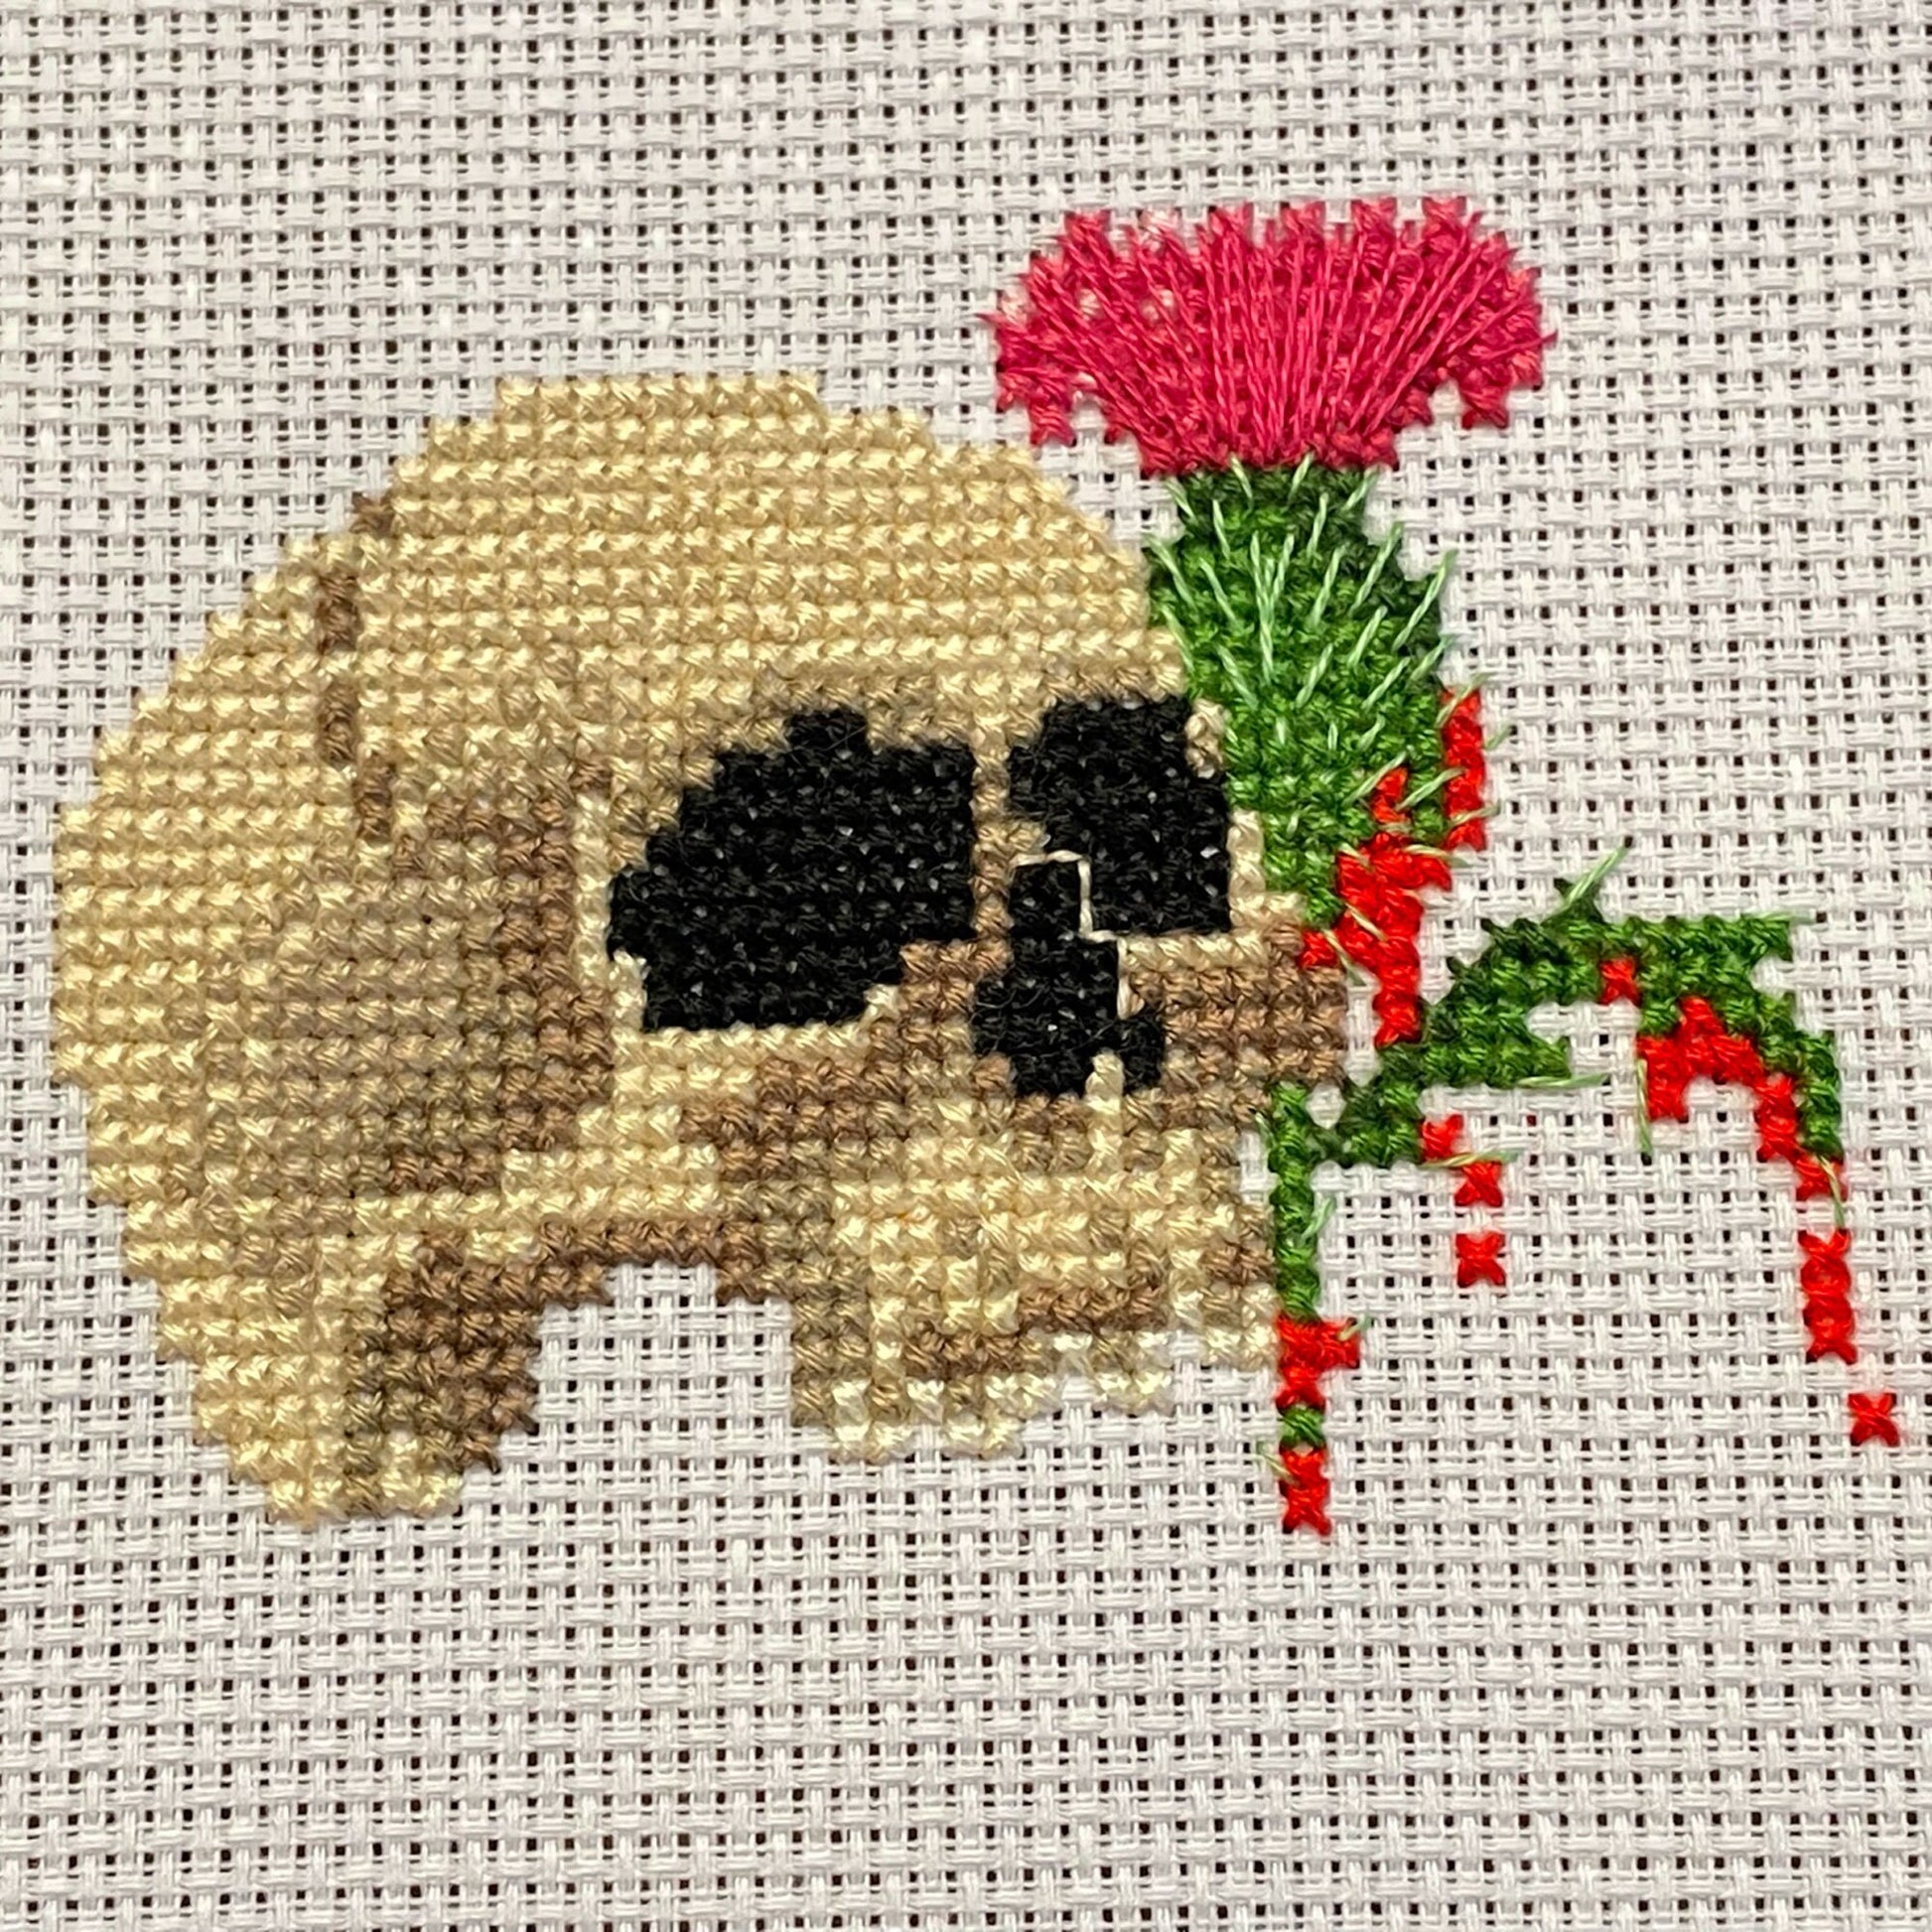 Cross stitch Skull with a bleeding thistle